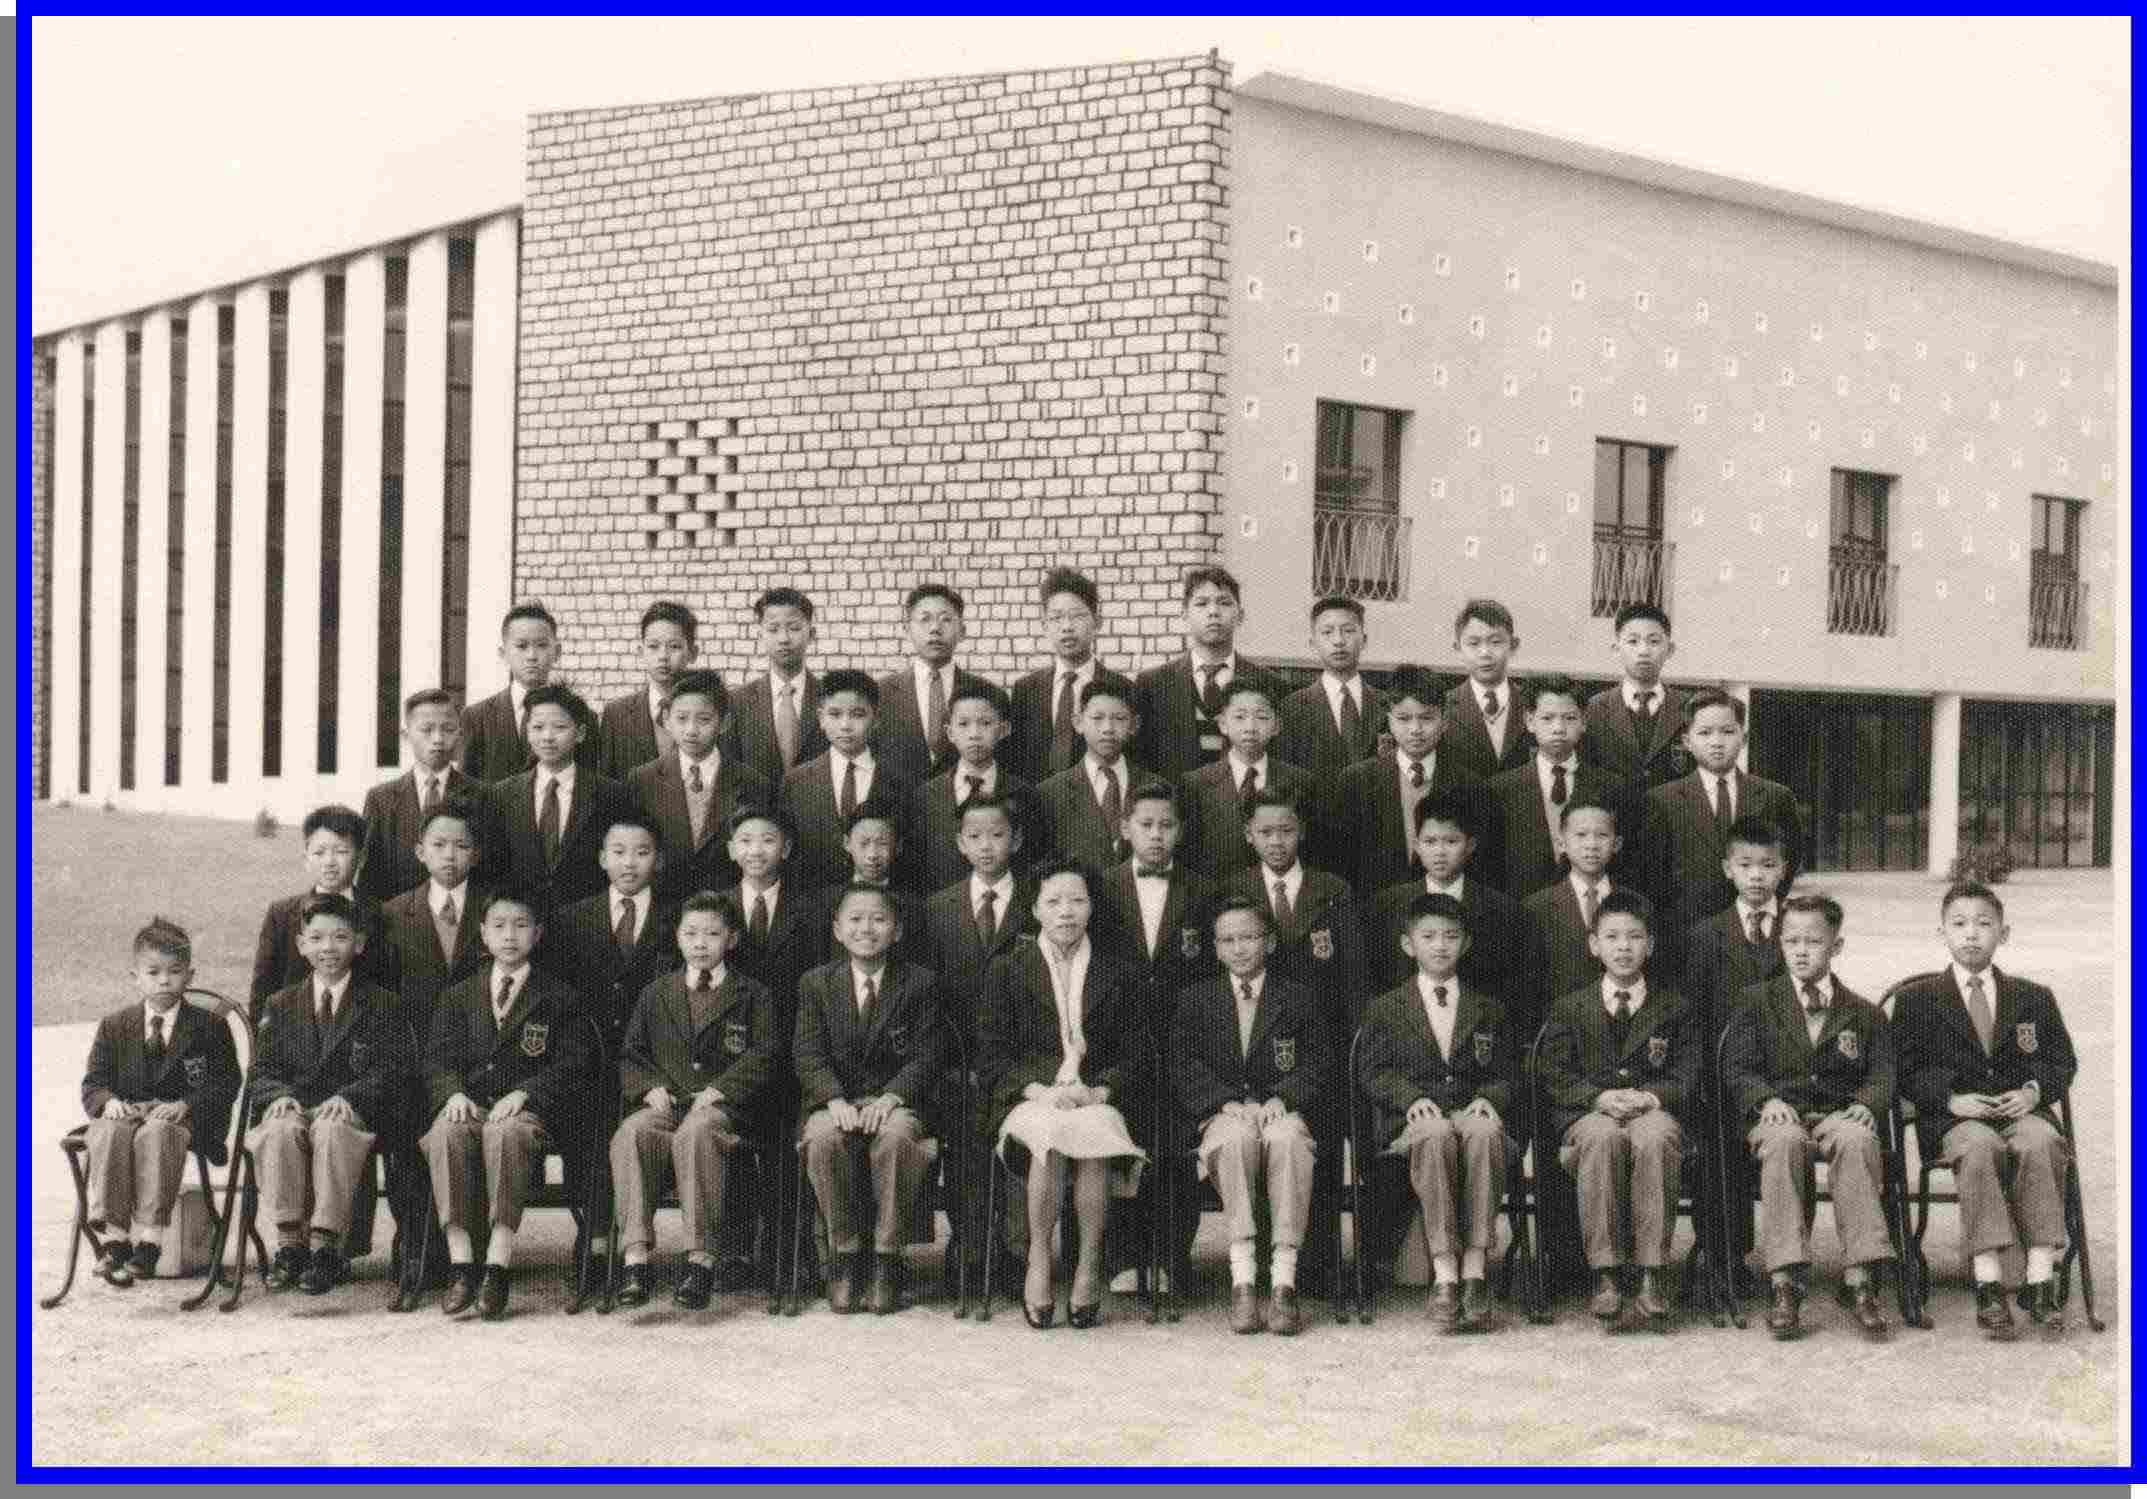 1955 Primary 6D class photo